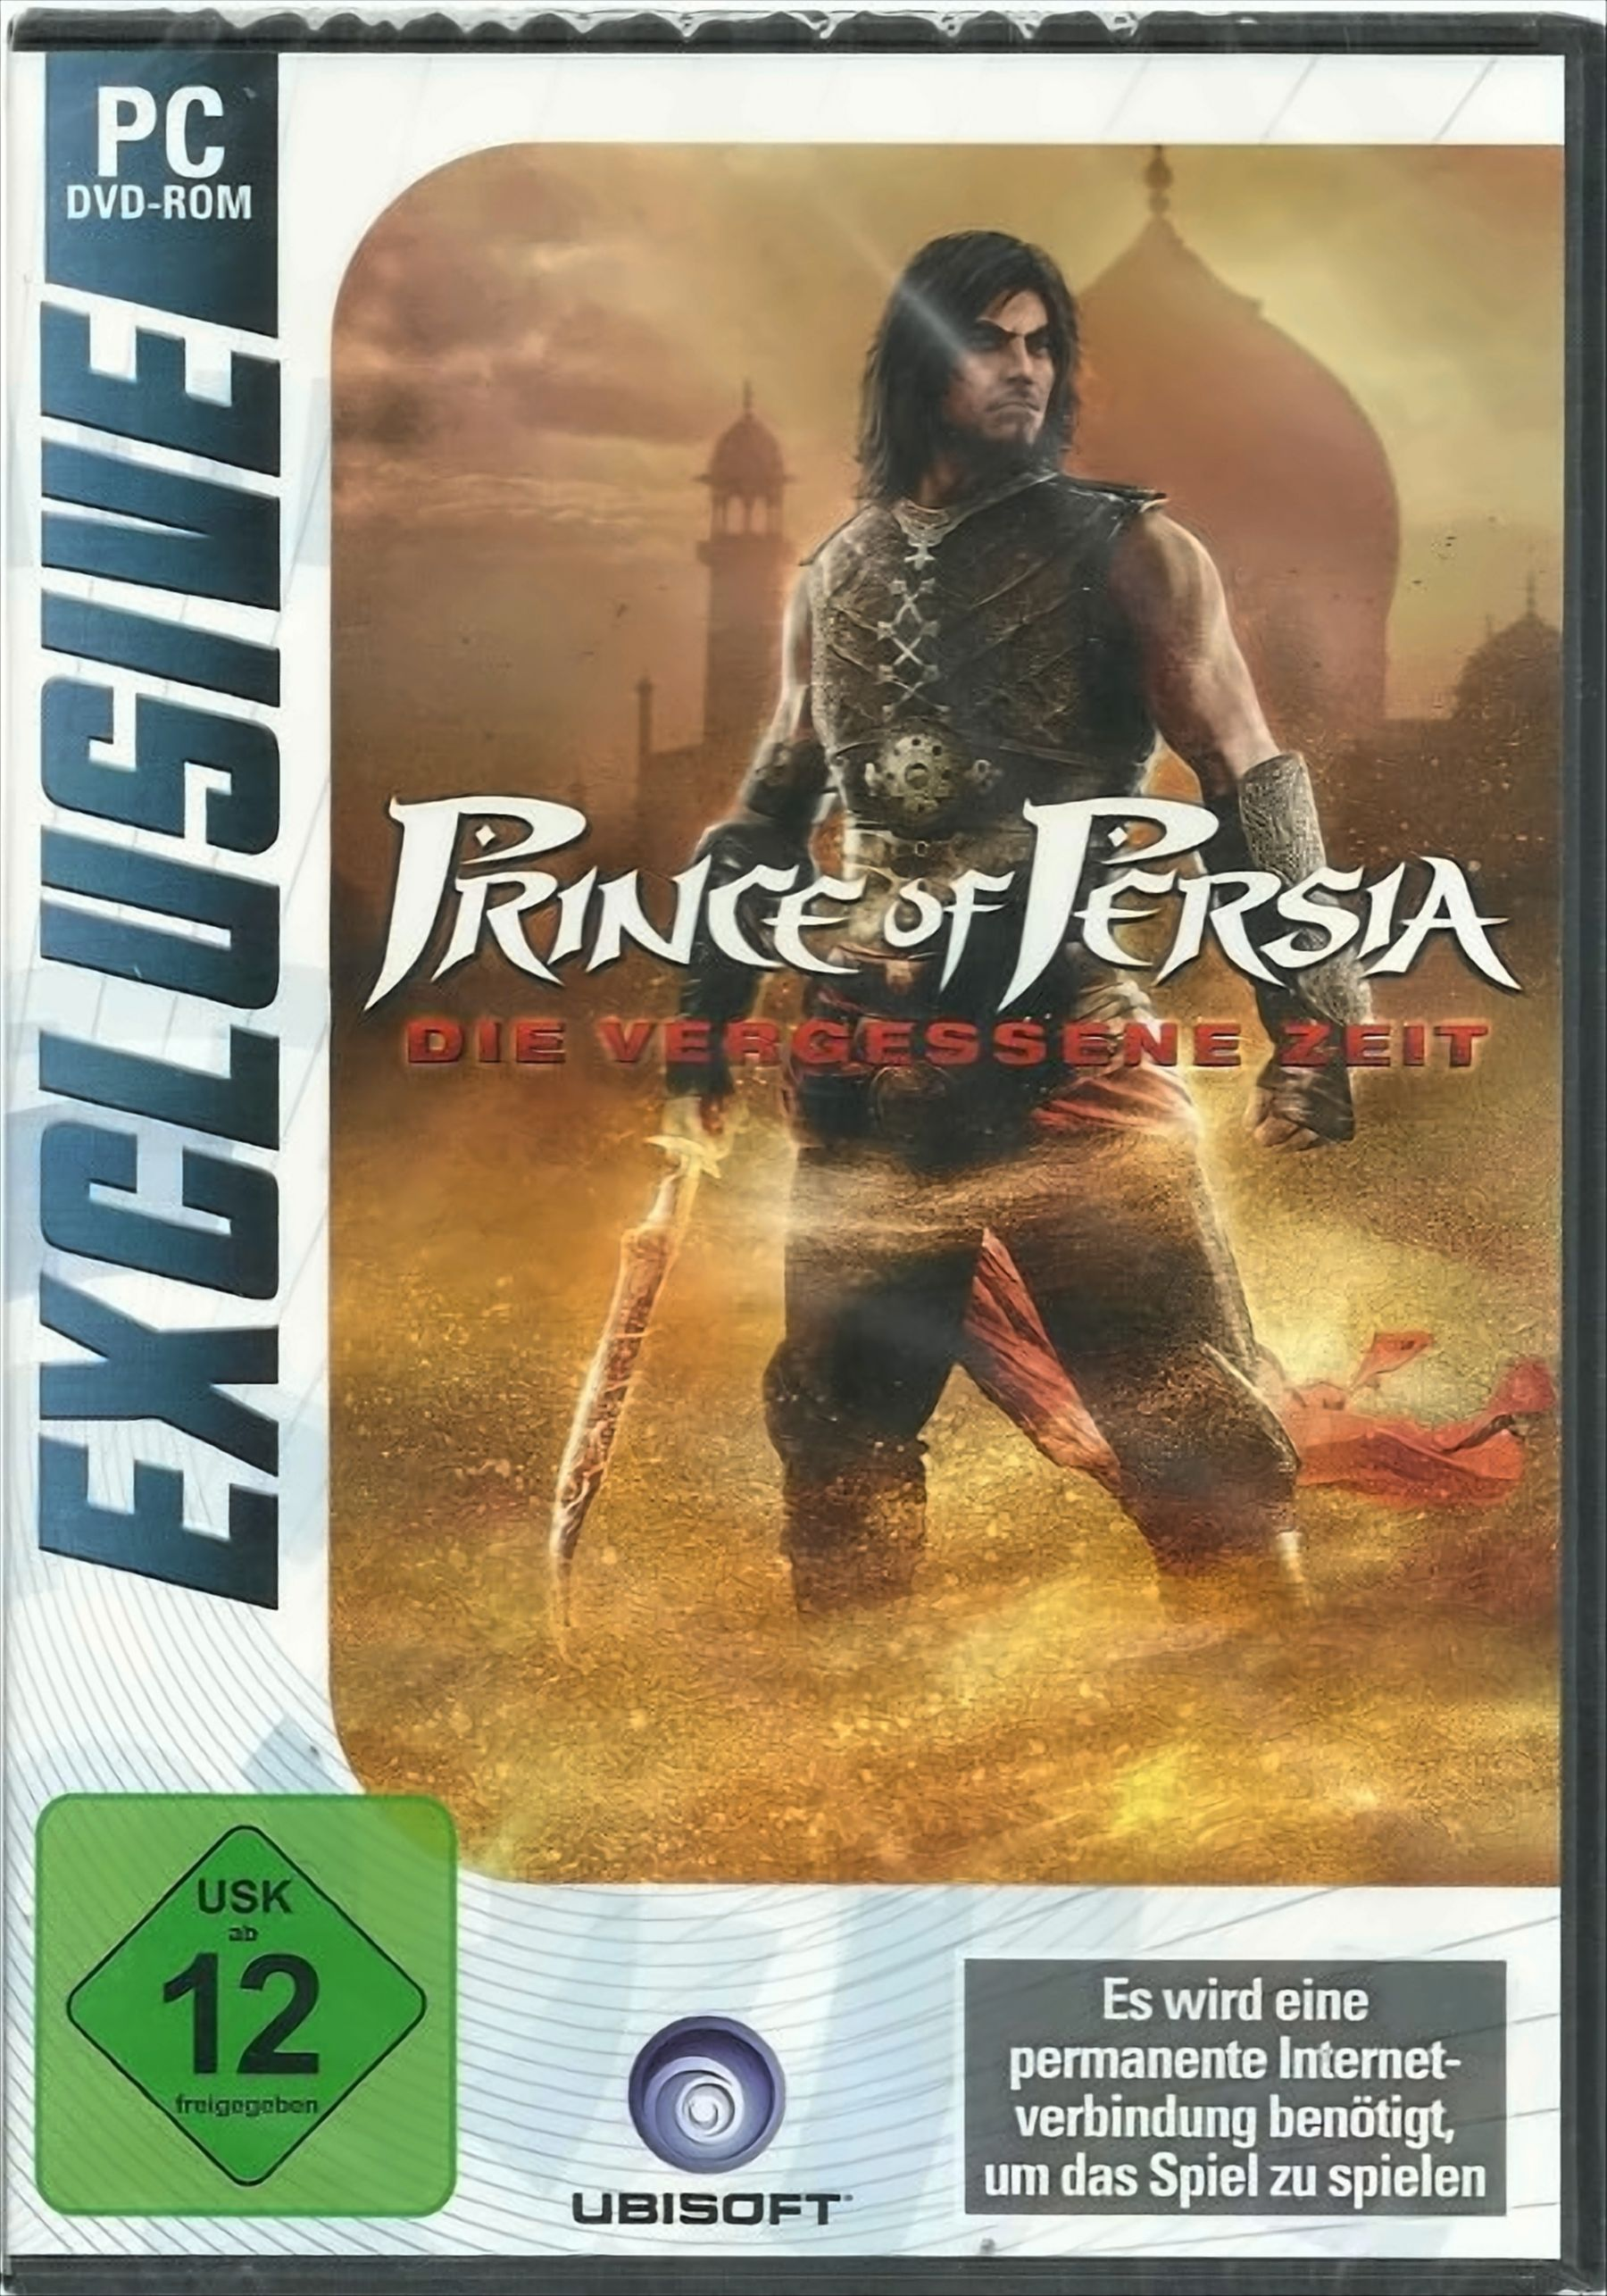 Die Persia Prince - of - [PC] Zeit vergessene